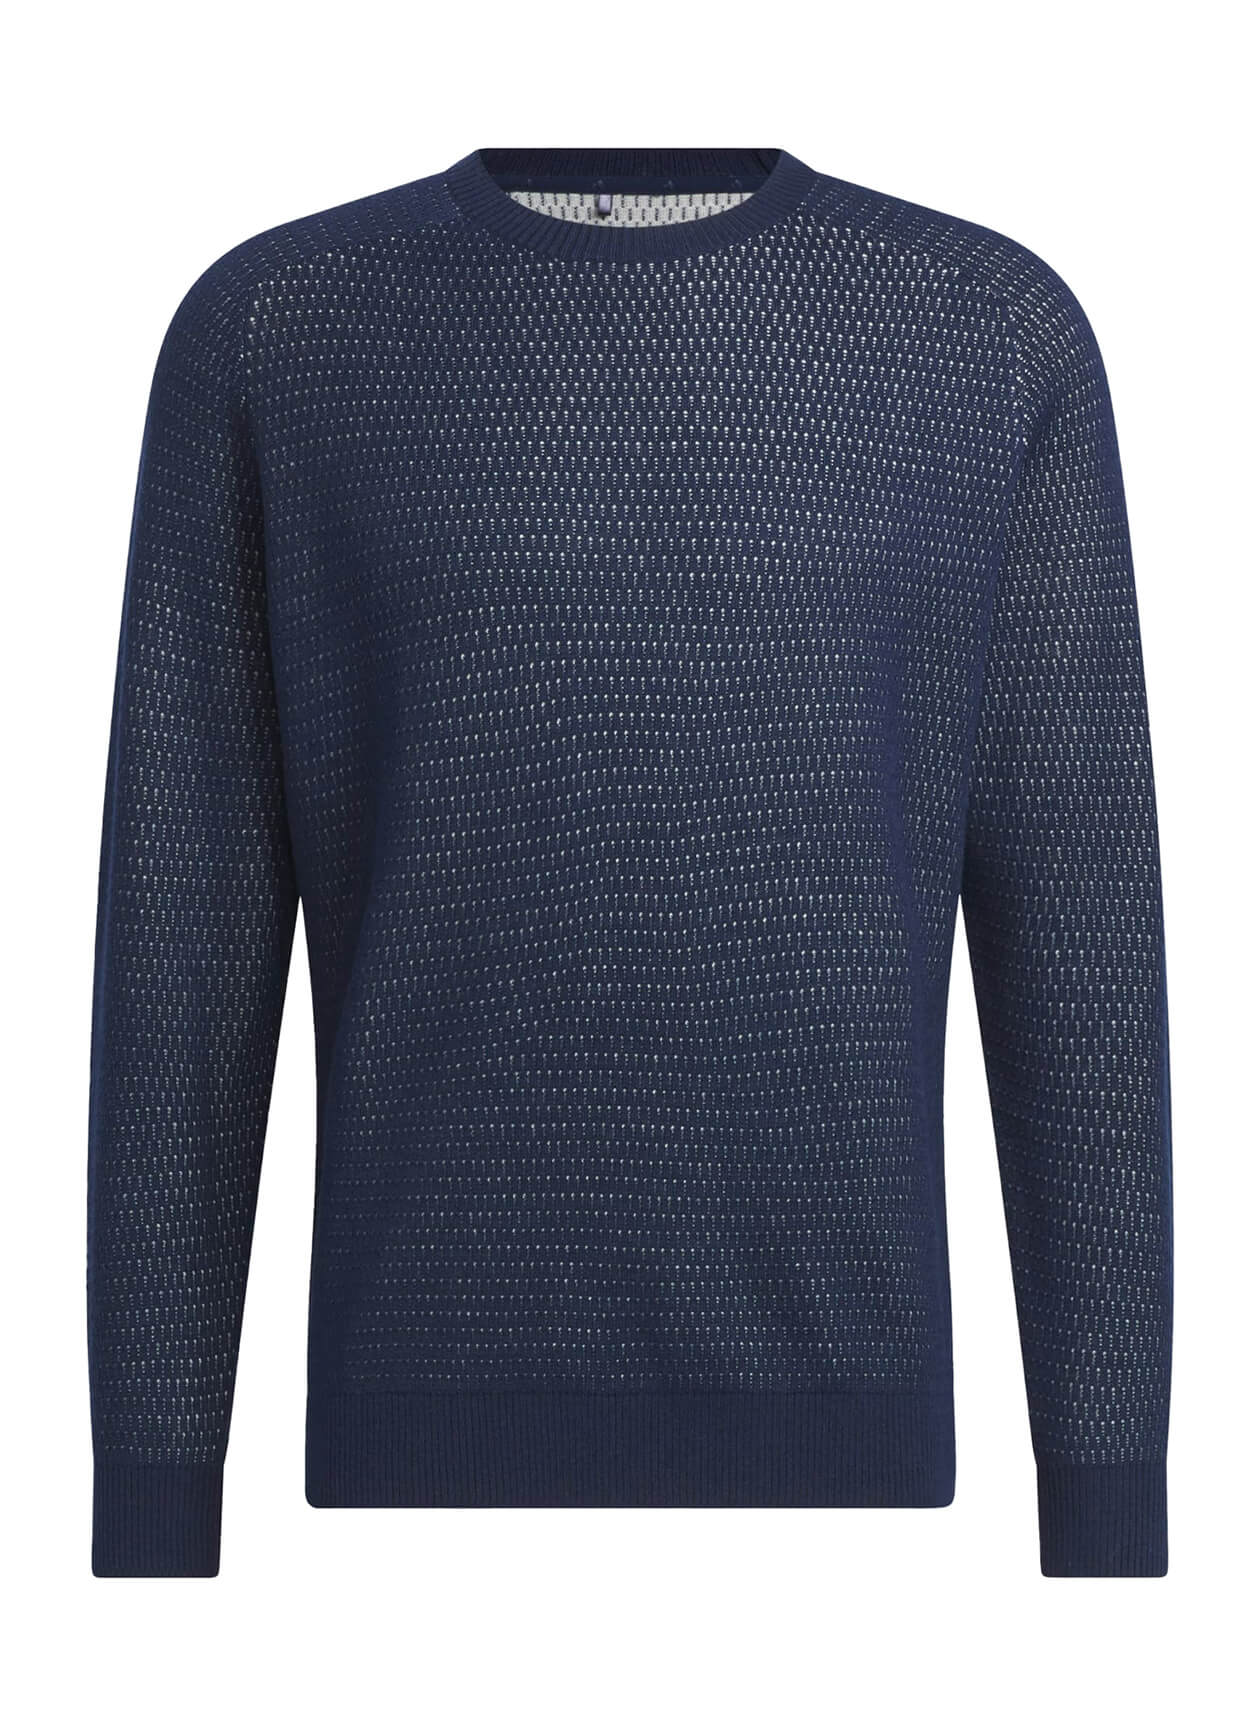 Adidas AD124 - Golf Men's Ultimate Tour Flat Knit Sweater